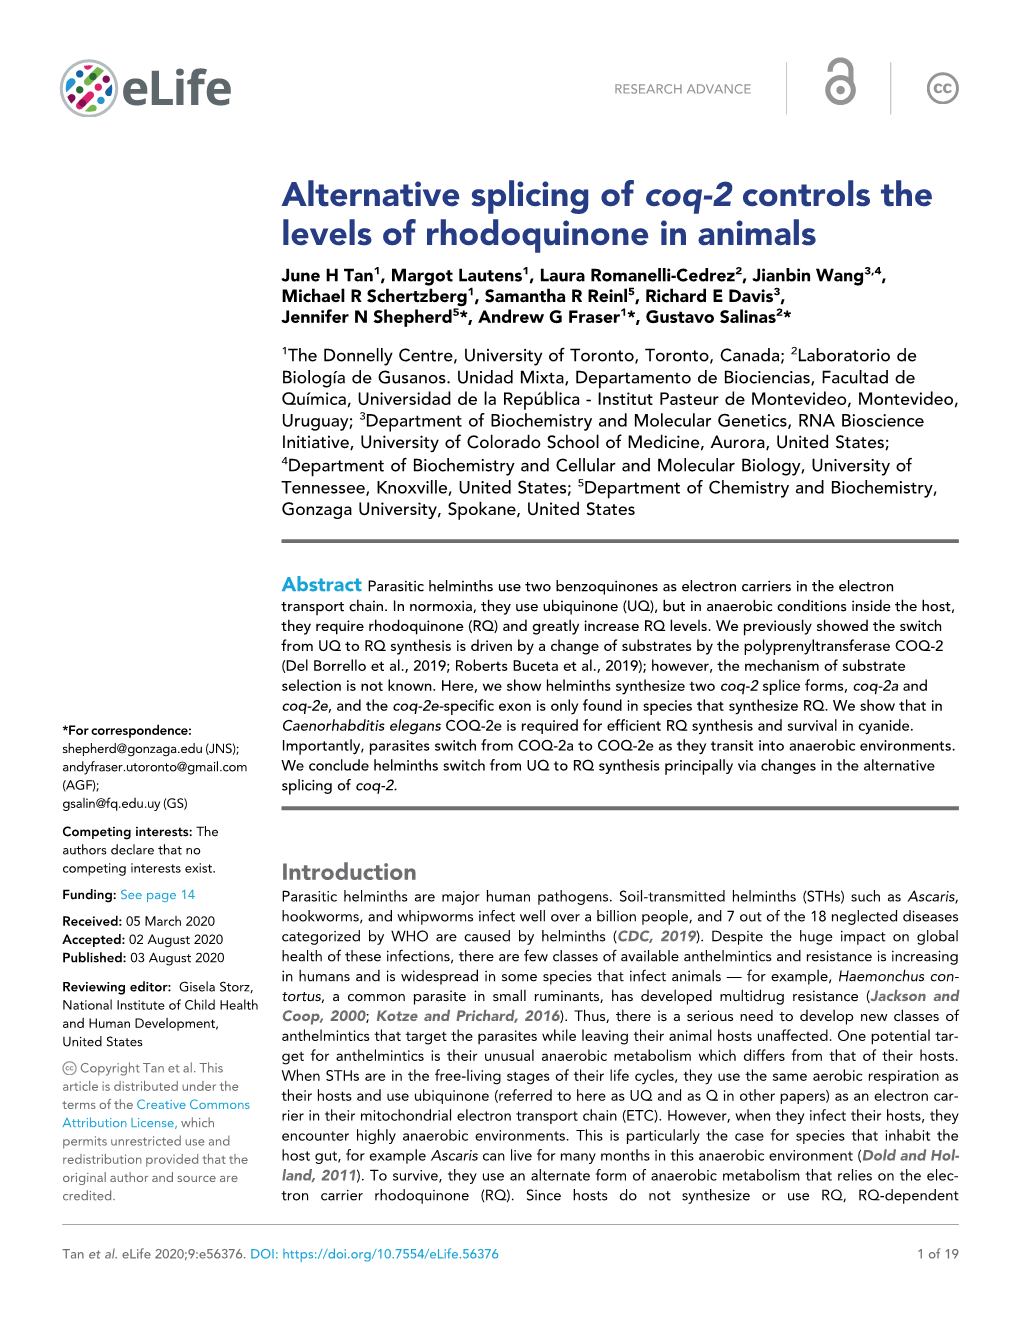 Alternative Splicing of Coq-2 Controls the Levels of Rhodoquinone in Animals